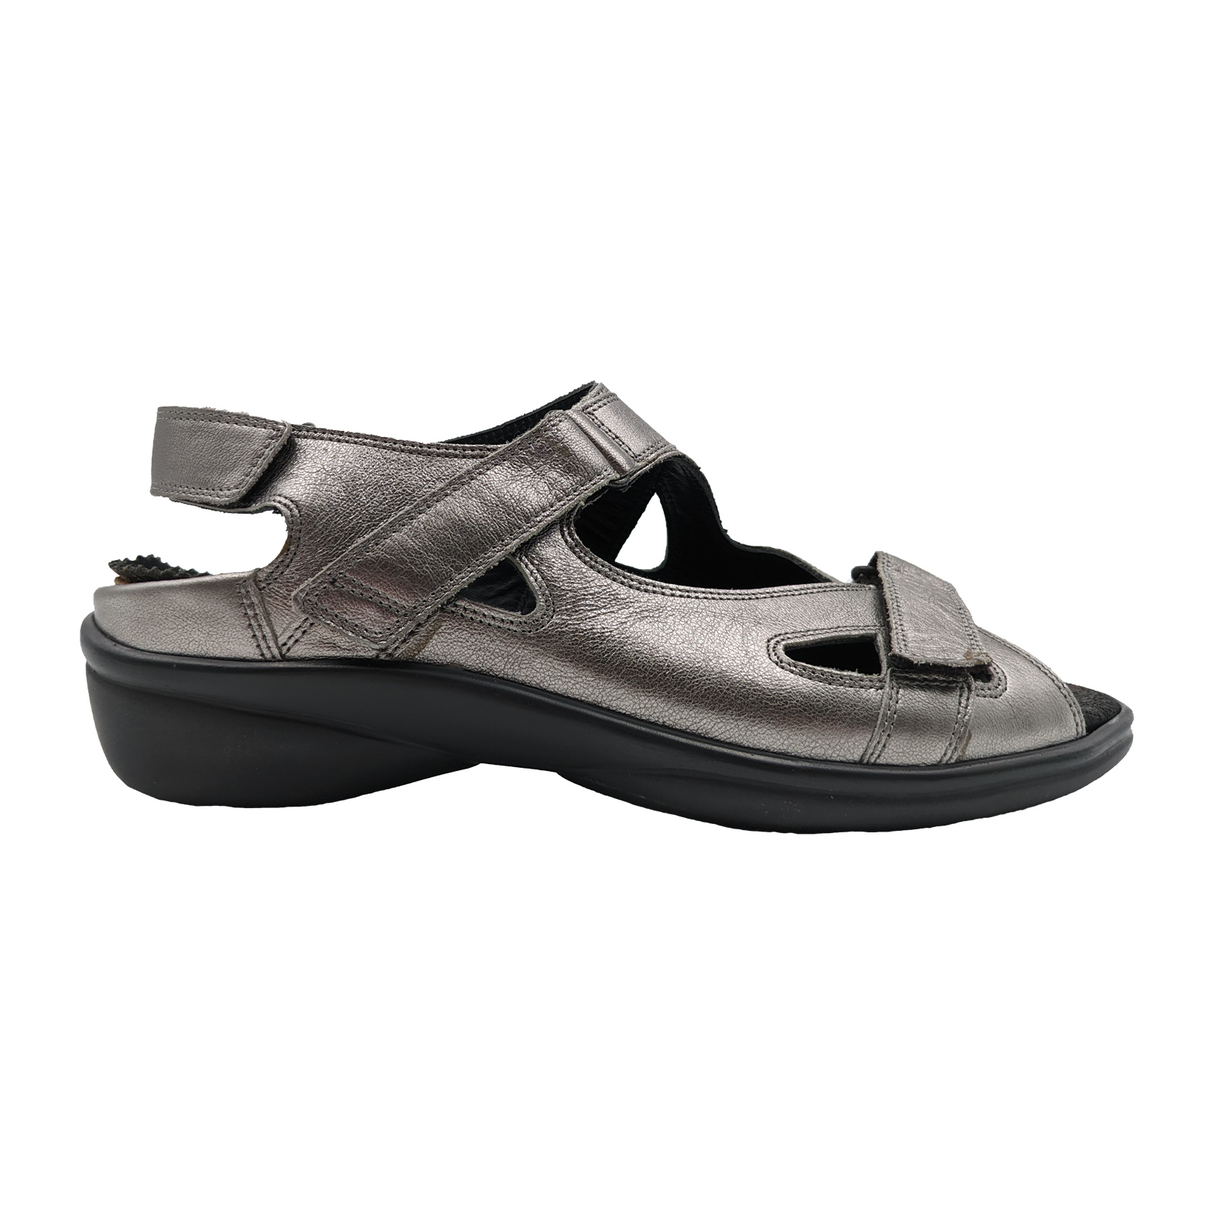 Durea Diana (Women) - Pewter Metallic Sandals - Backstrap - The Heel Shoe Fitters